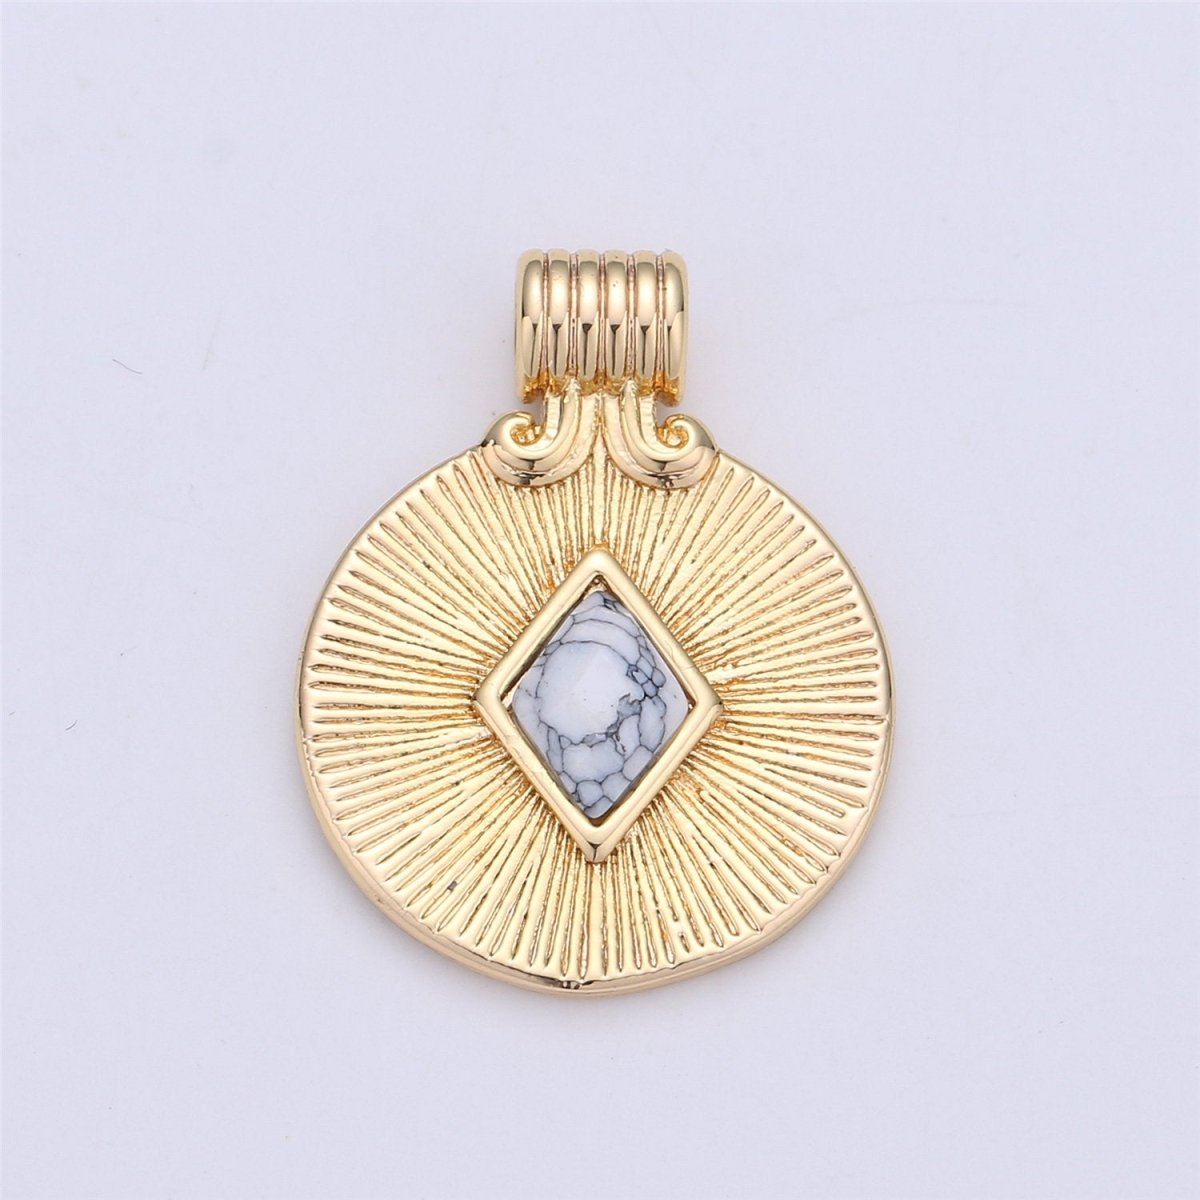 OS Dainty Medallion Pendant - 18K Gold Filled Rhombus Howlite Turquoise Stone Round Disc Charm Necklace Pendant C-742 - DLUXCA